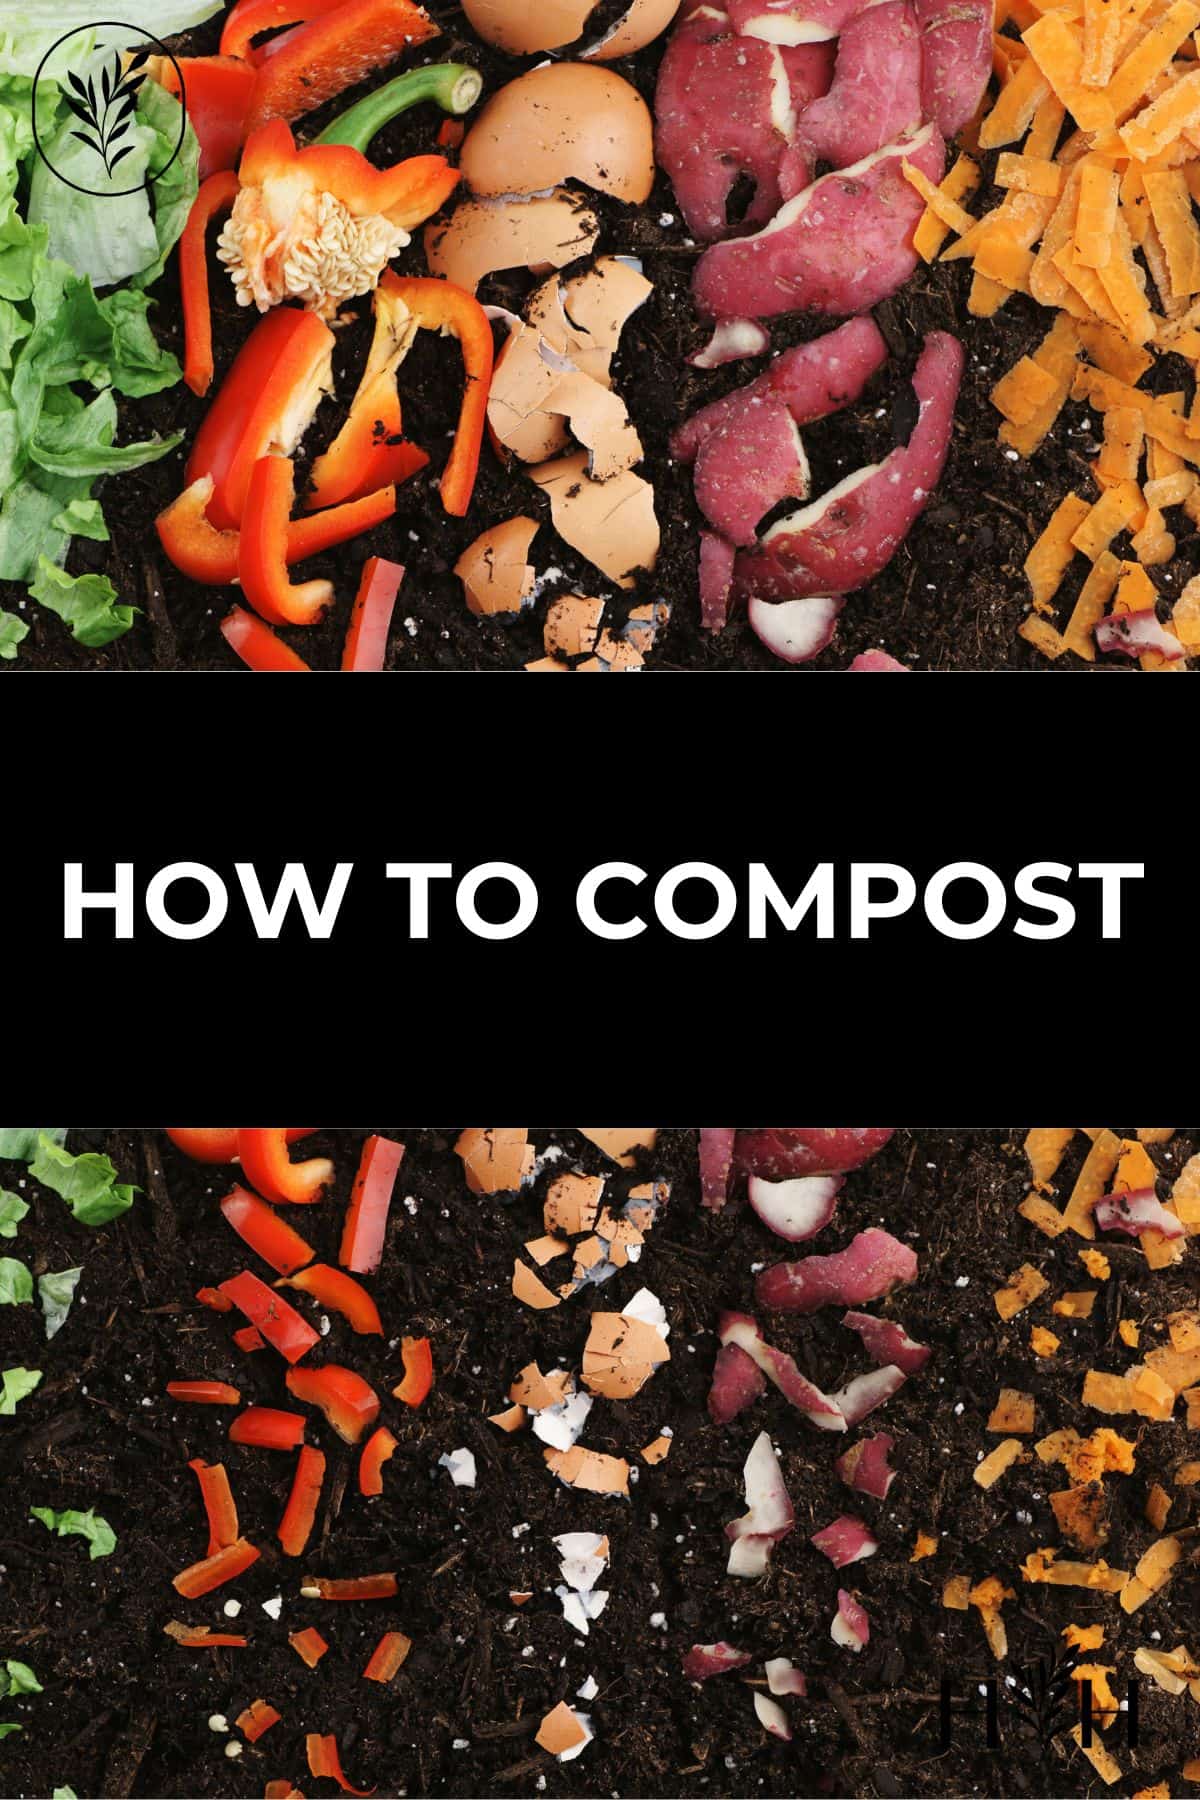 How to compost via @home4theharvest